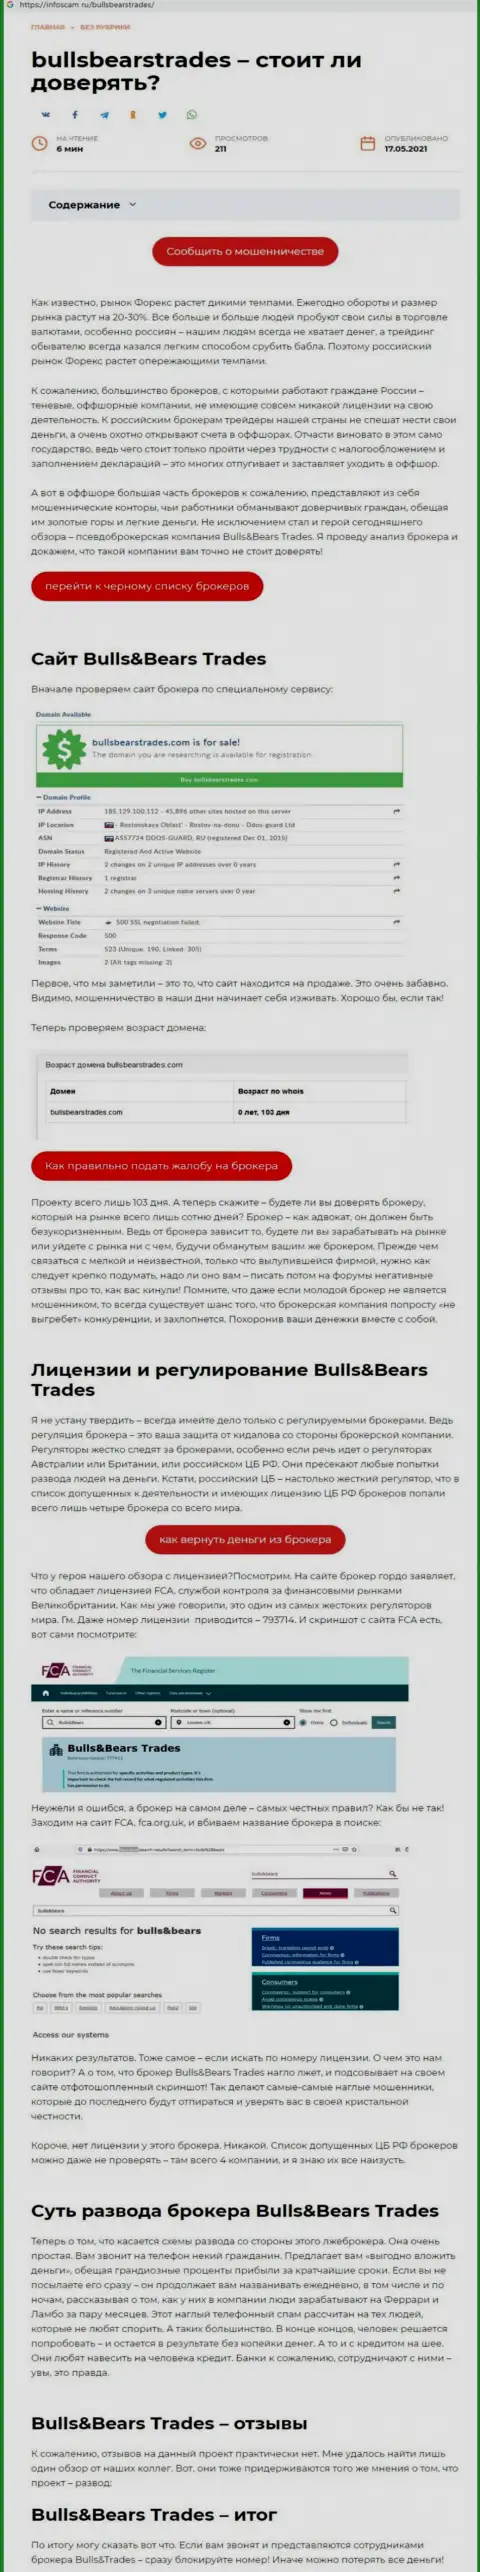 BullsBears Trades - это ШУЛЕР !!! Приемы грабежа (обзор деятельности)